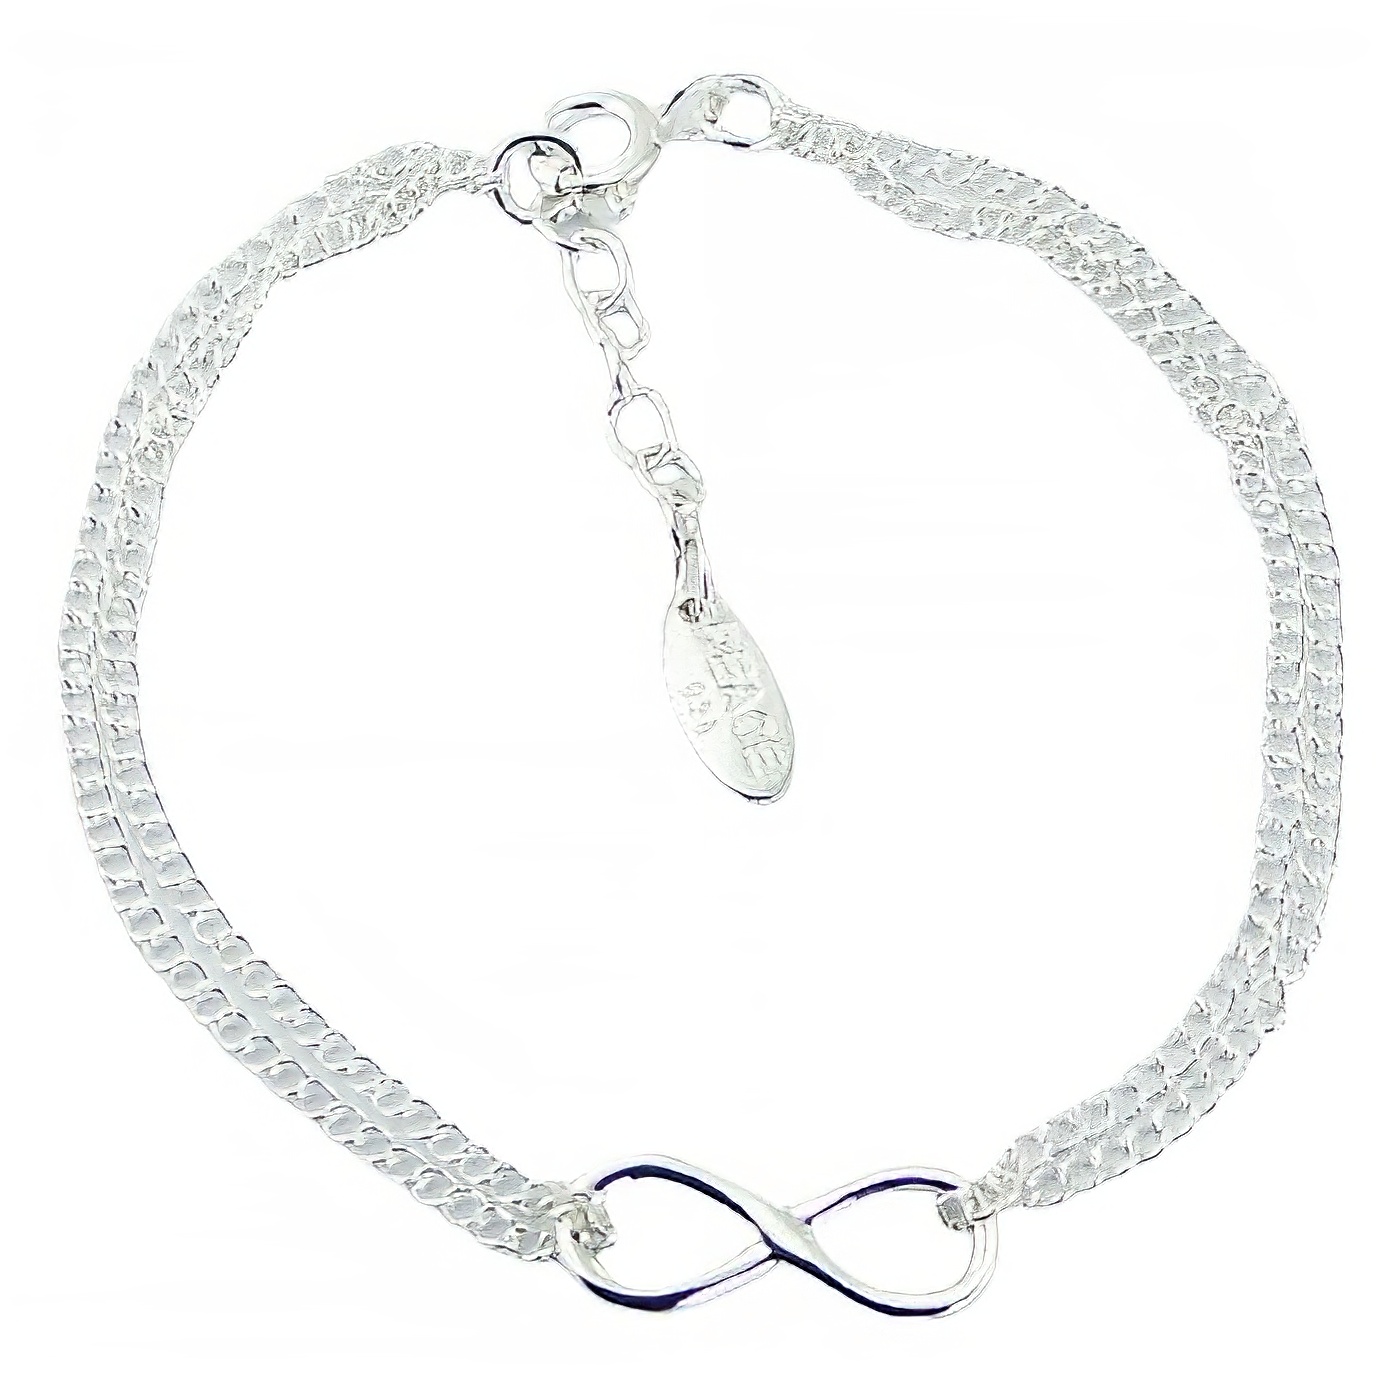 Silver Infinity Bracelet Delicate Silver Chain by BeYindi 